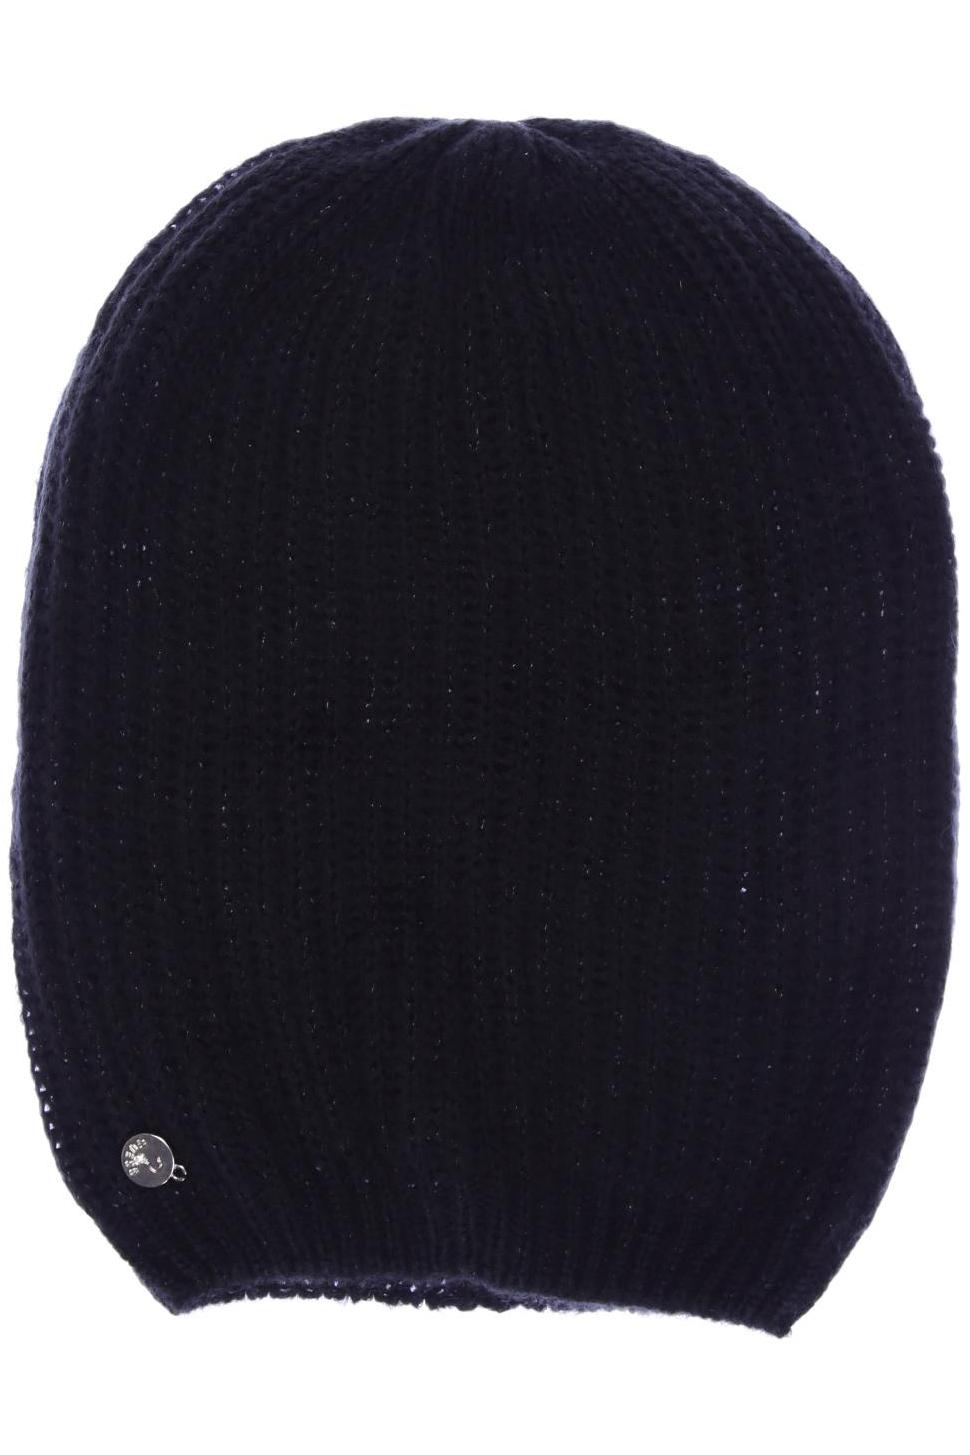 GUESS Damen Hut/Mütze, schwarz von Guess